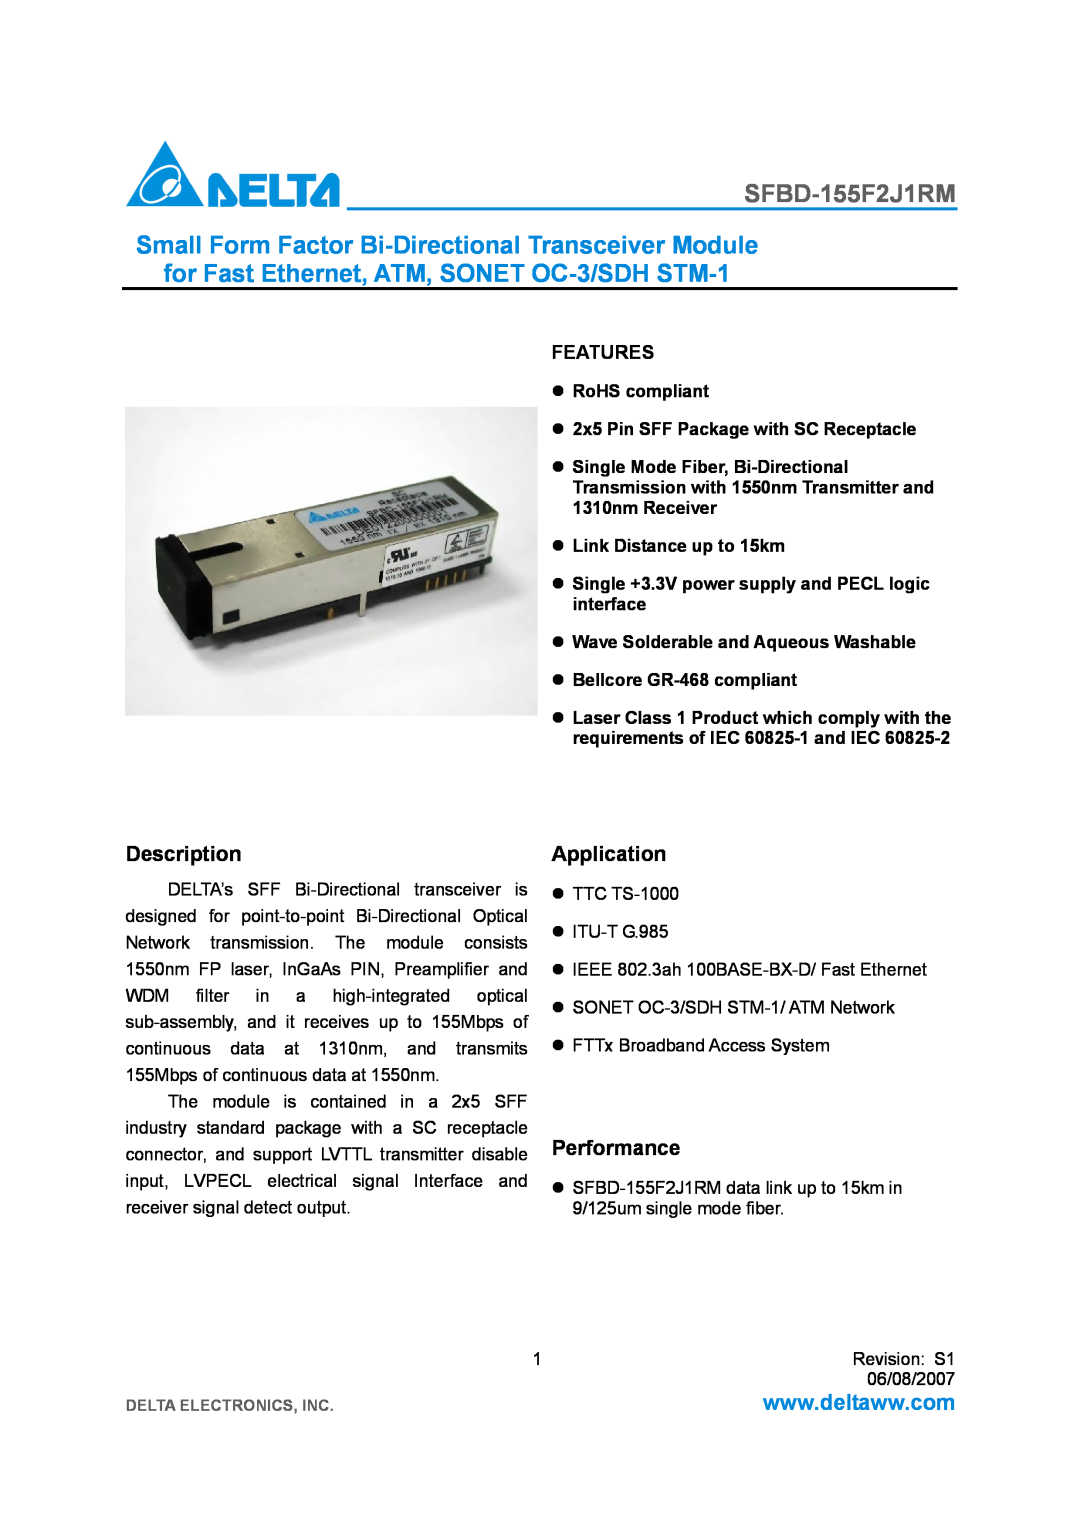 Delta Electronics SFBD-155F2J1RM manual Description, Application, Performance, Features, Link Distance up to 15km 